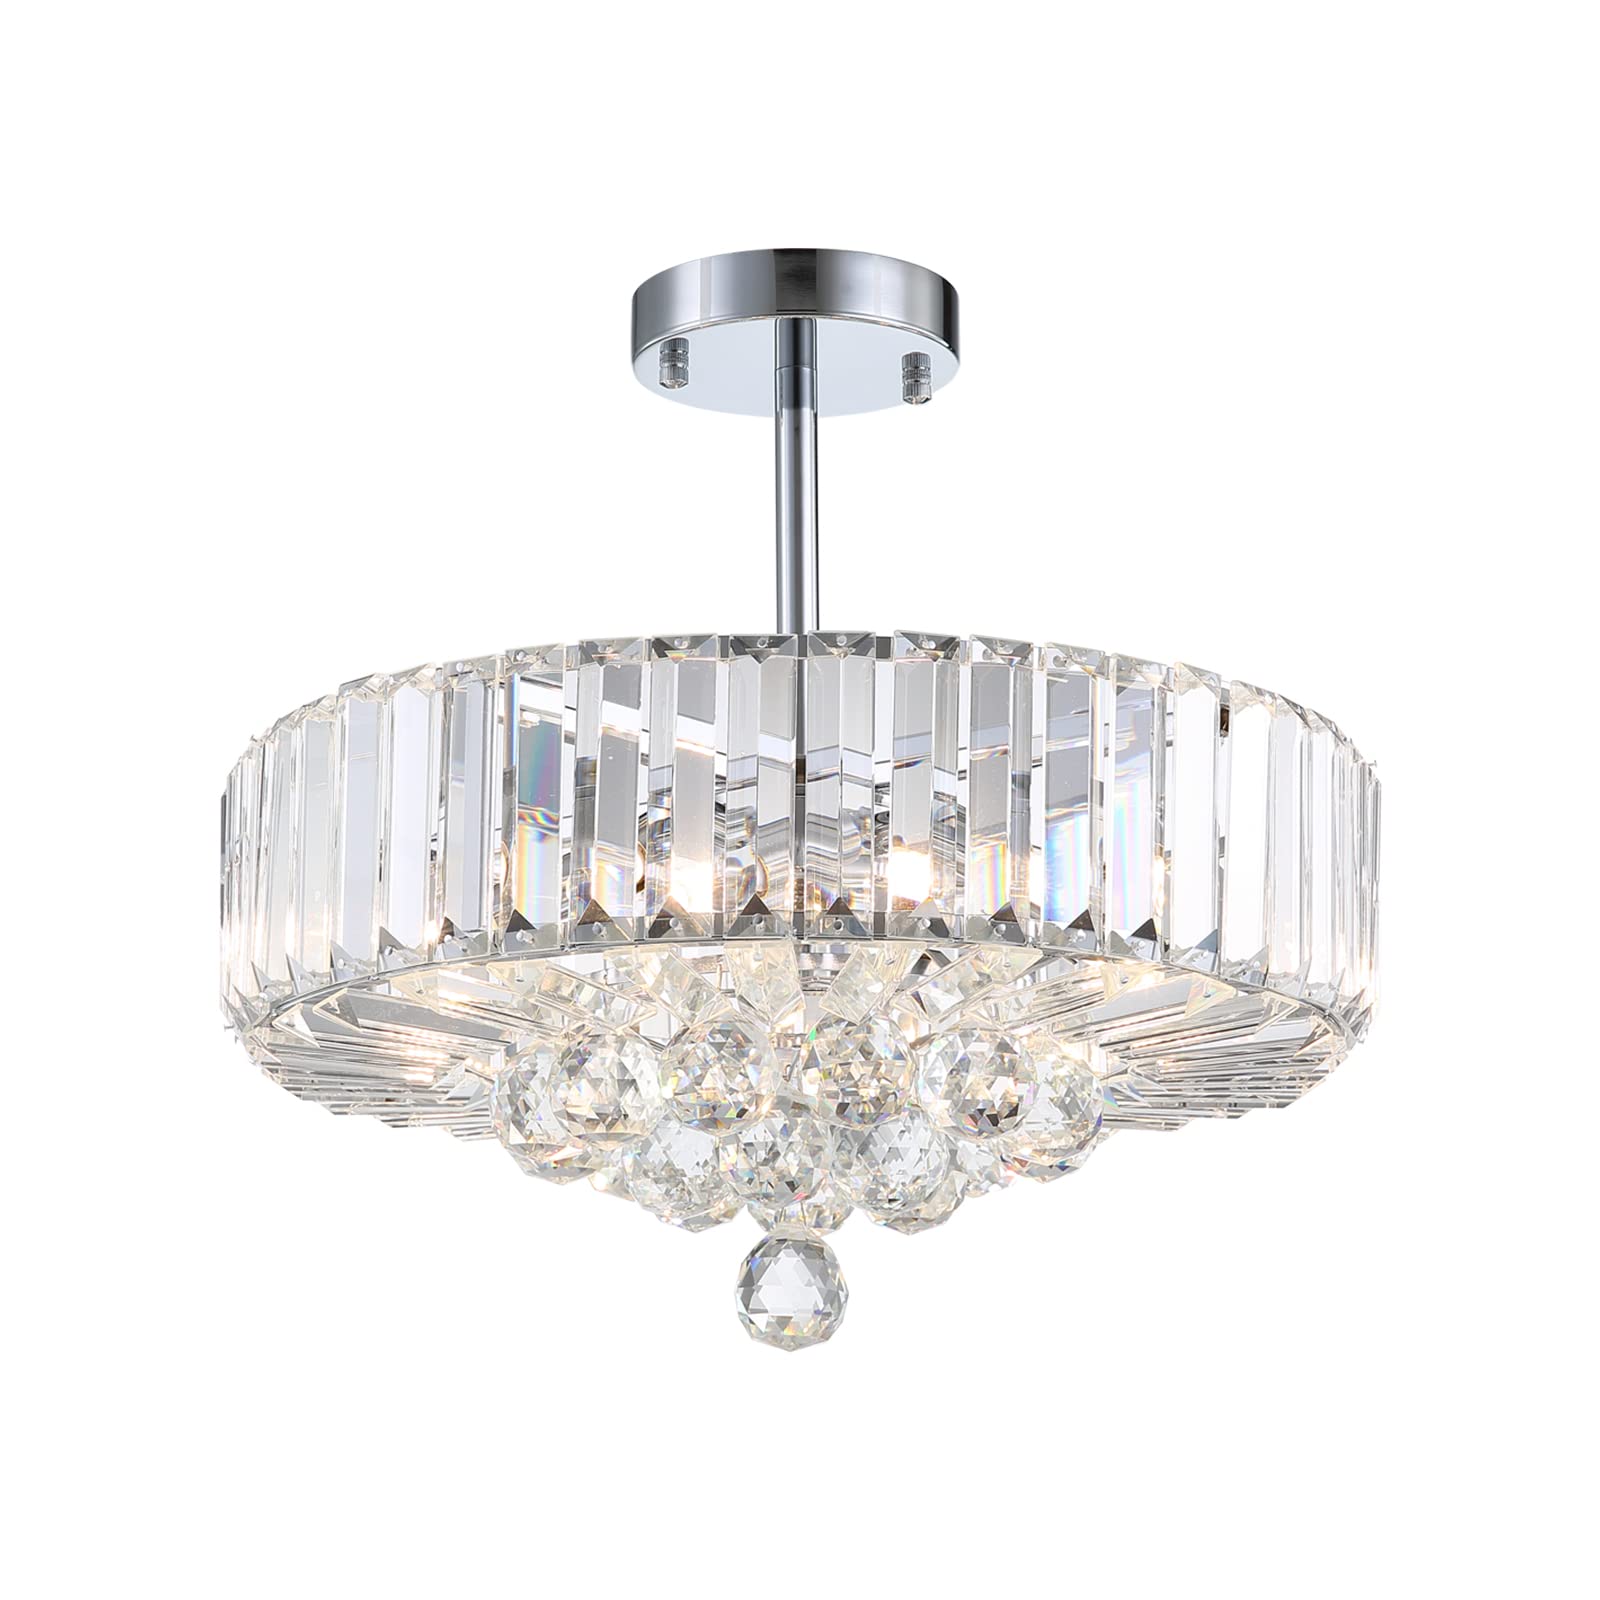 Siljoy Modern crystal chandelier chrome, Siljoy 5-Light Semi Flush Mount Round LED ceiling Light K9 Raindrop Pendant Light Fixture for